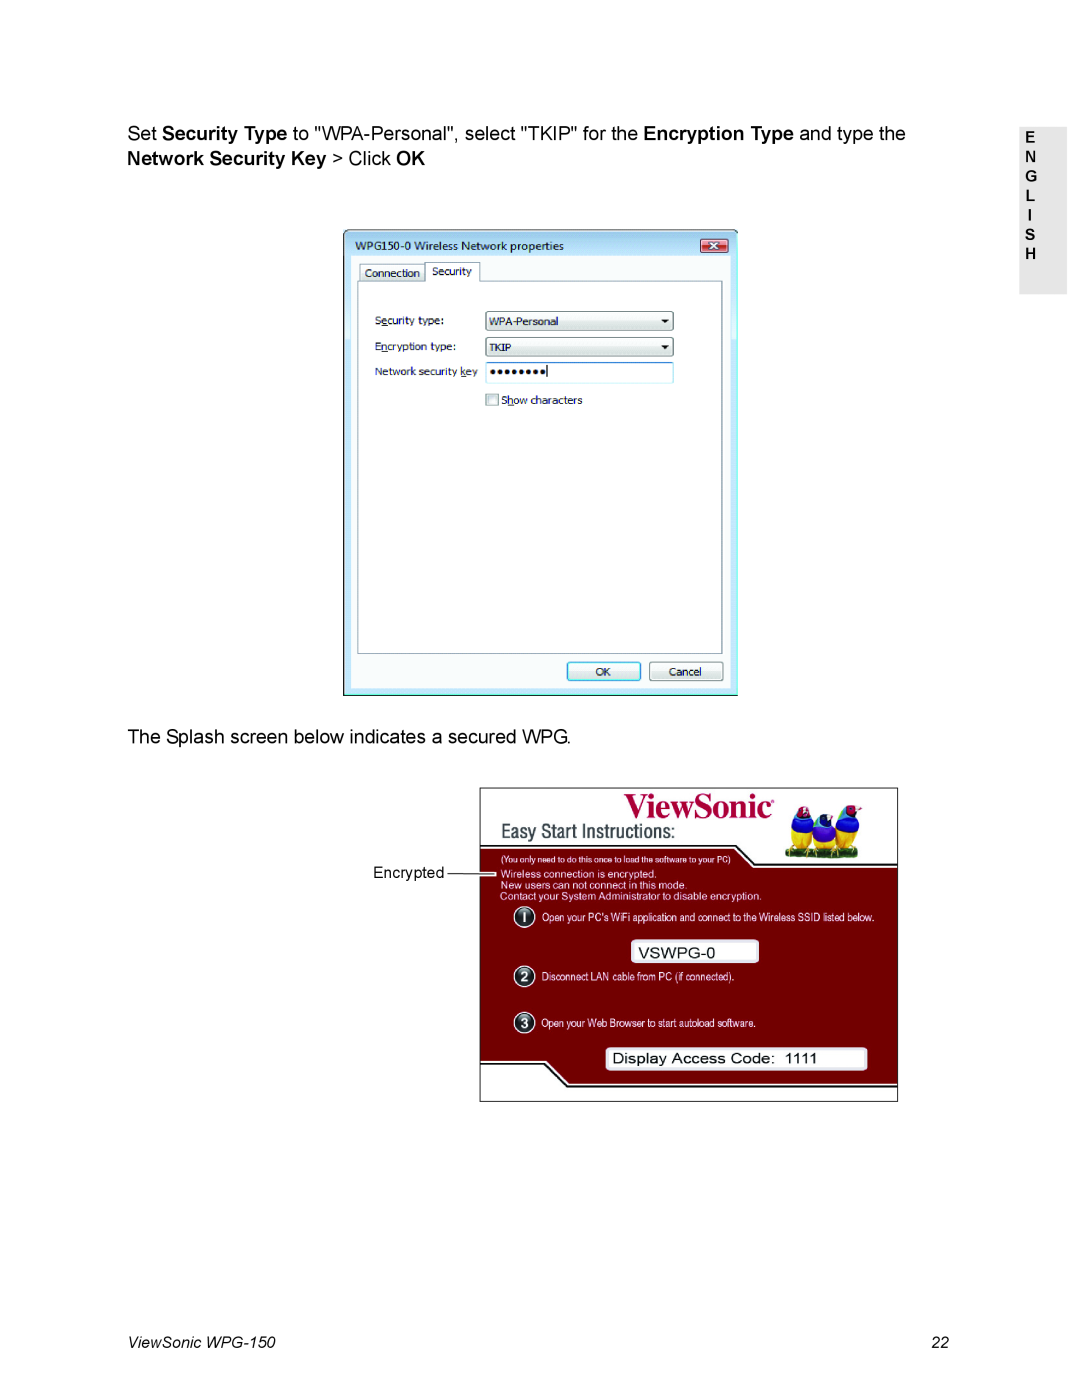 ViewSonic manual The Splash screen below indicates a secured WPG, Encrypted, E N G L I S H, ViewSonic WPG-150 